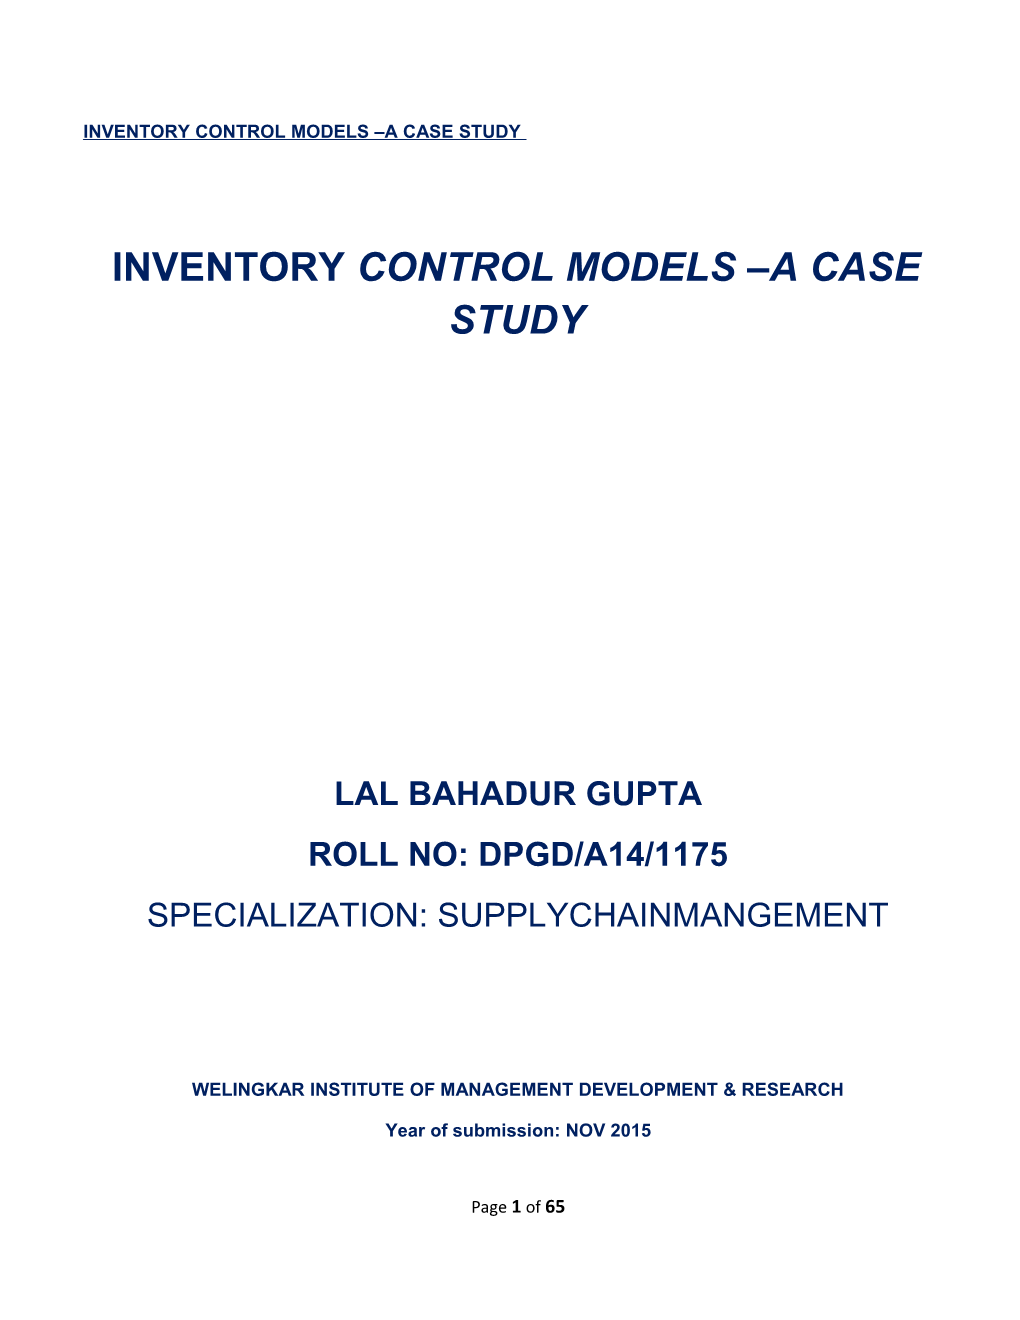 Inventory Control Models a Case Study